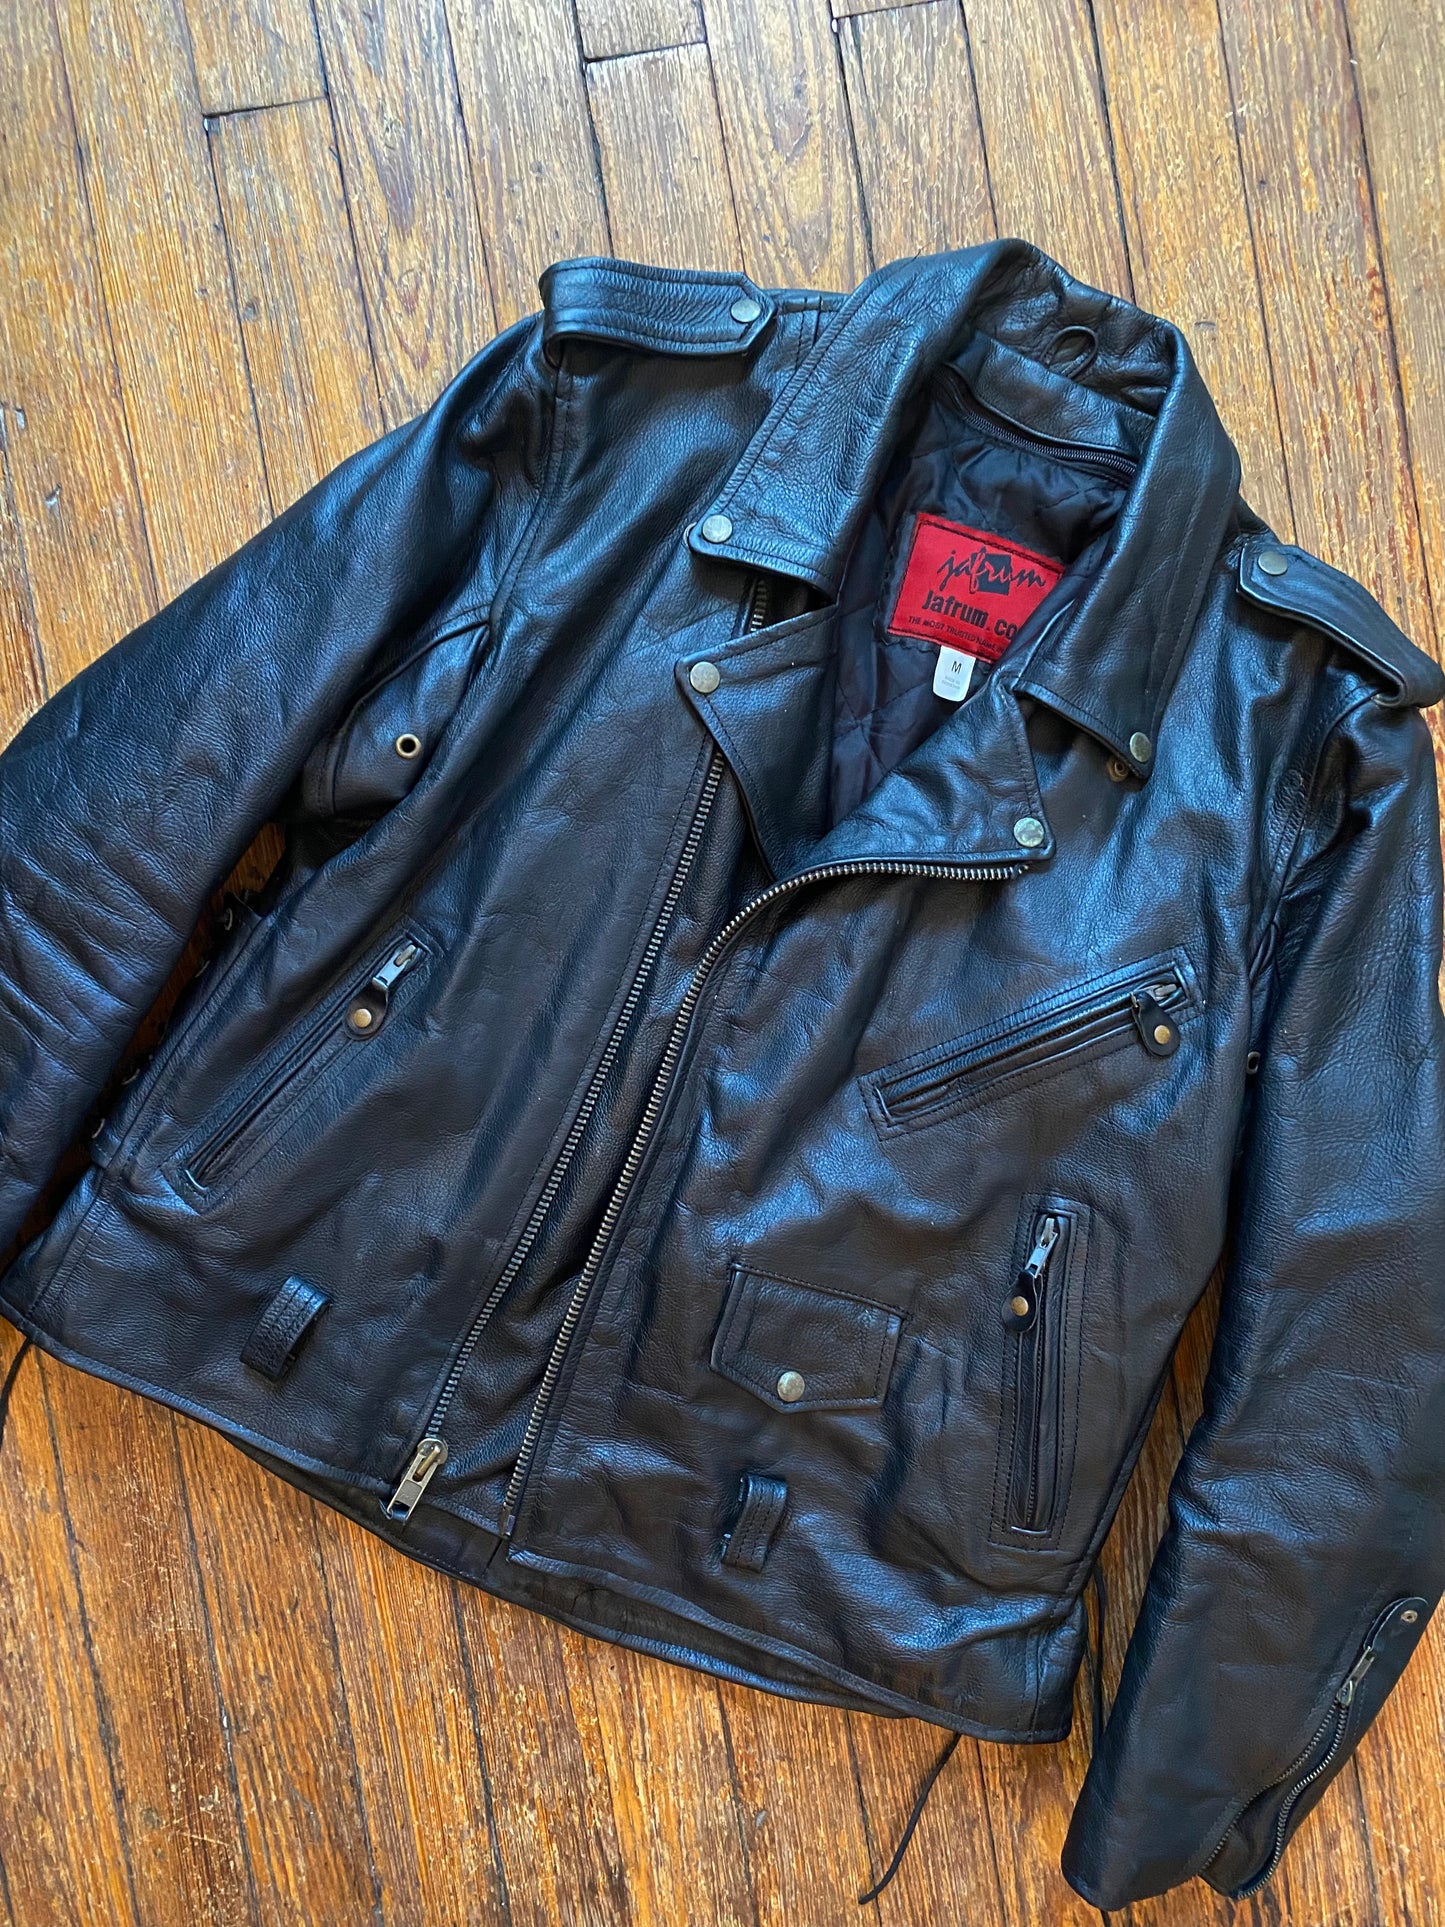 Vintage Jafrum Leather Motorcycle Jacket w/ Removable Lining